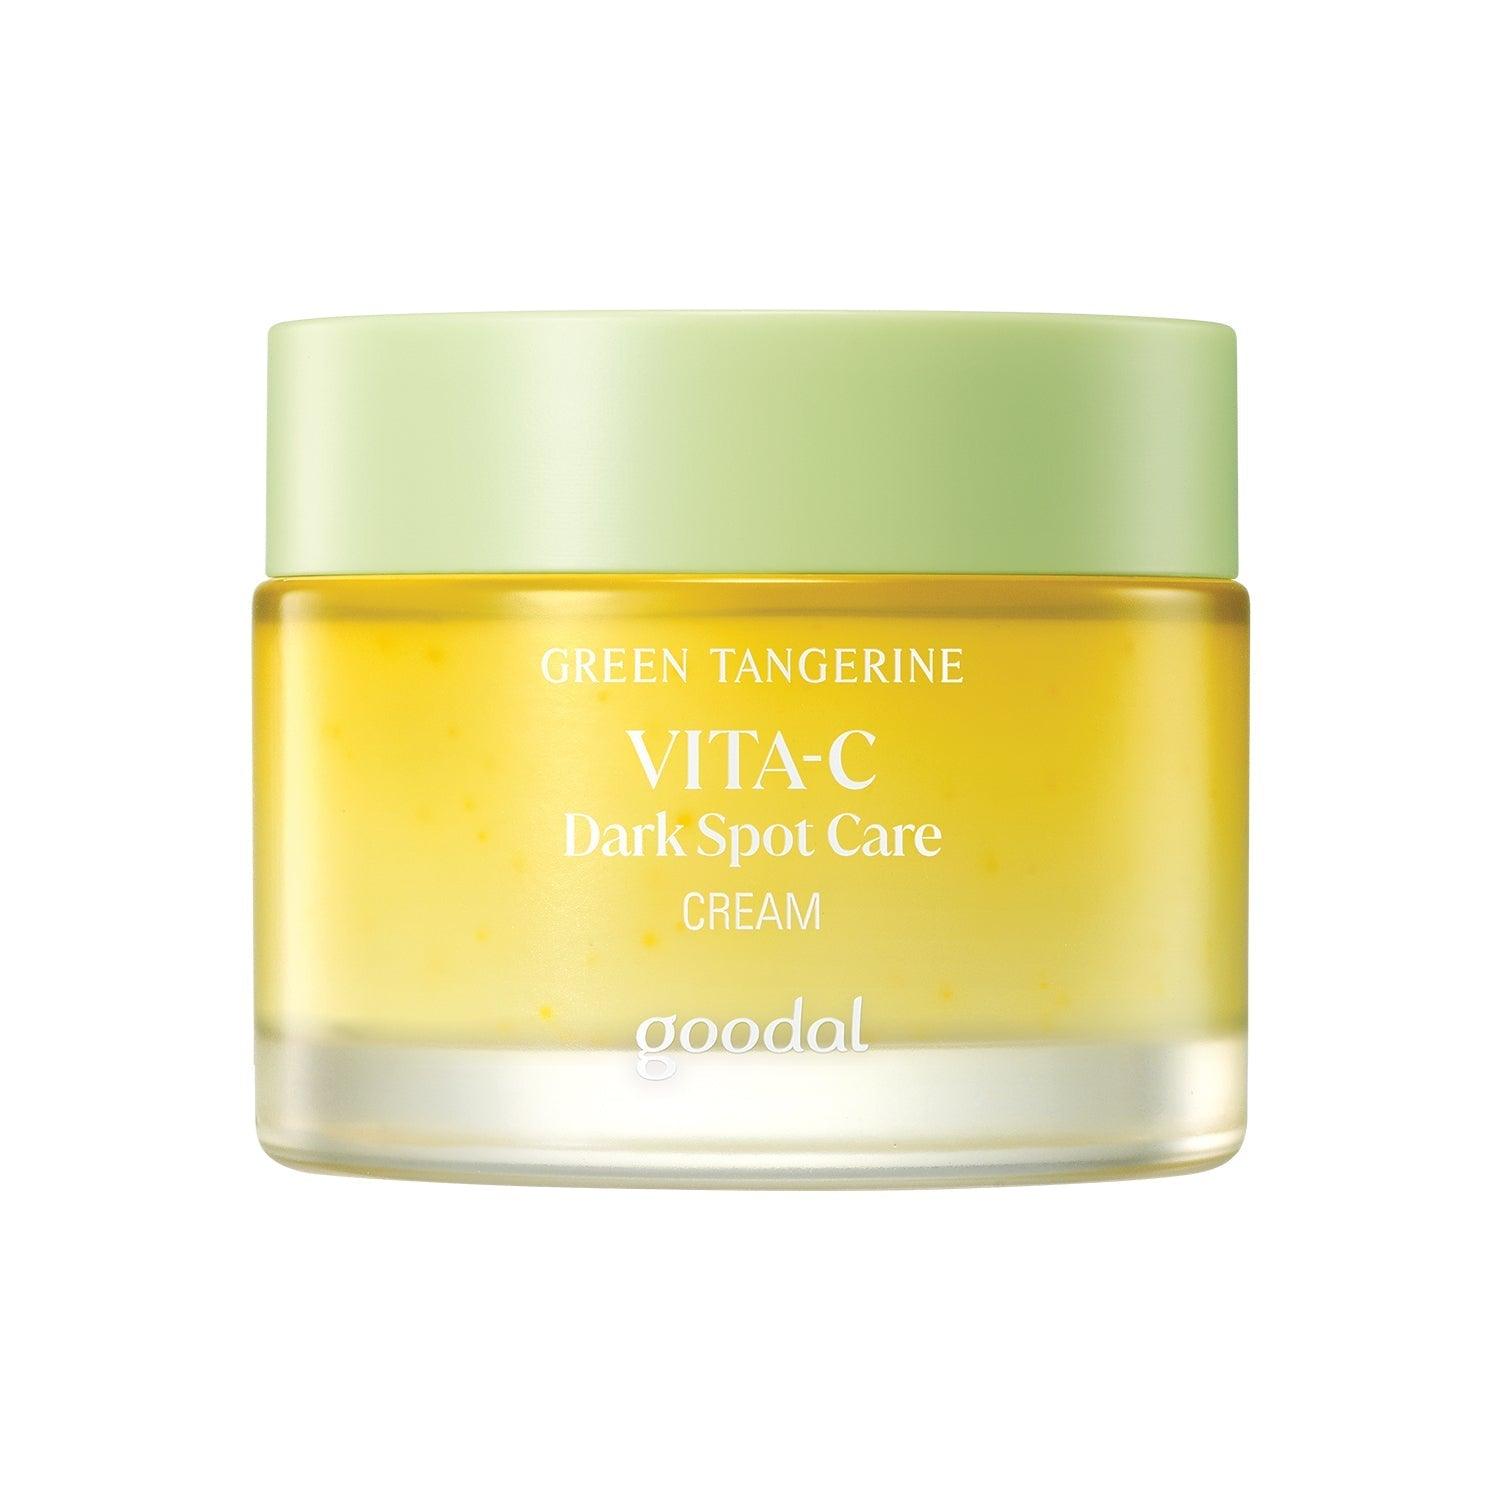 goodal Green Tangerine Vita C Dark Spot Care Cream 75ml - Pretty Mira Shop